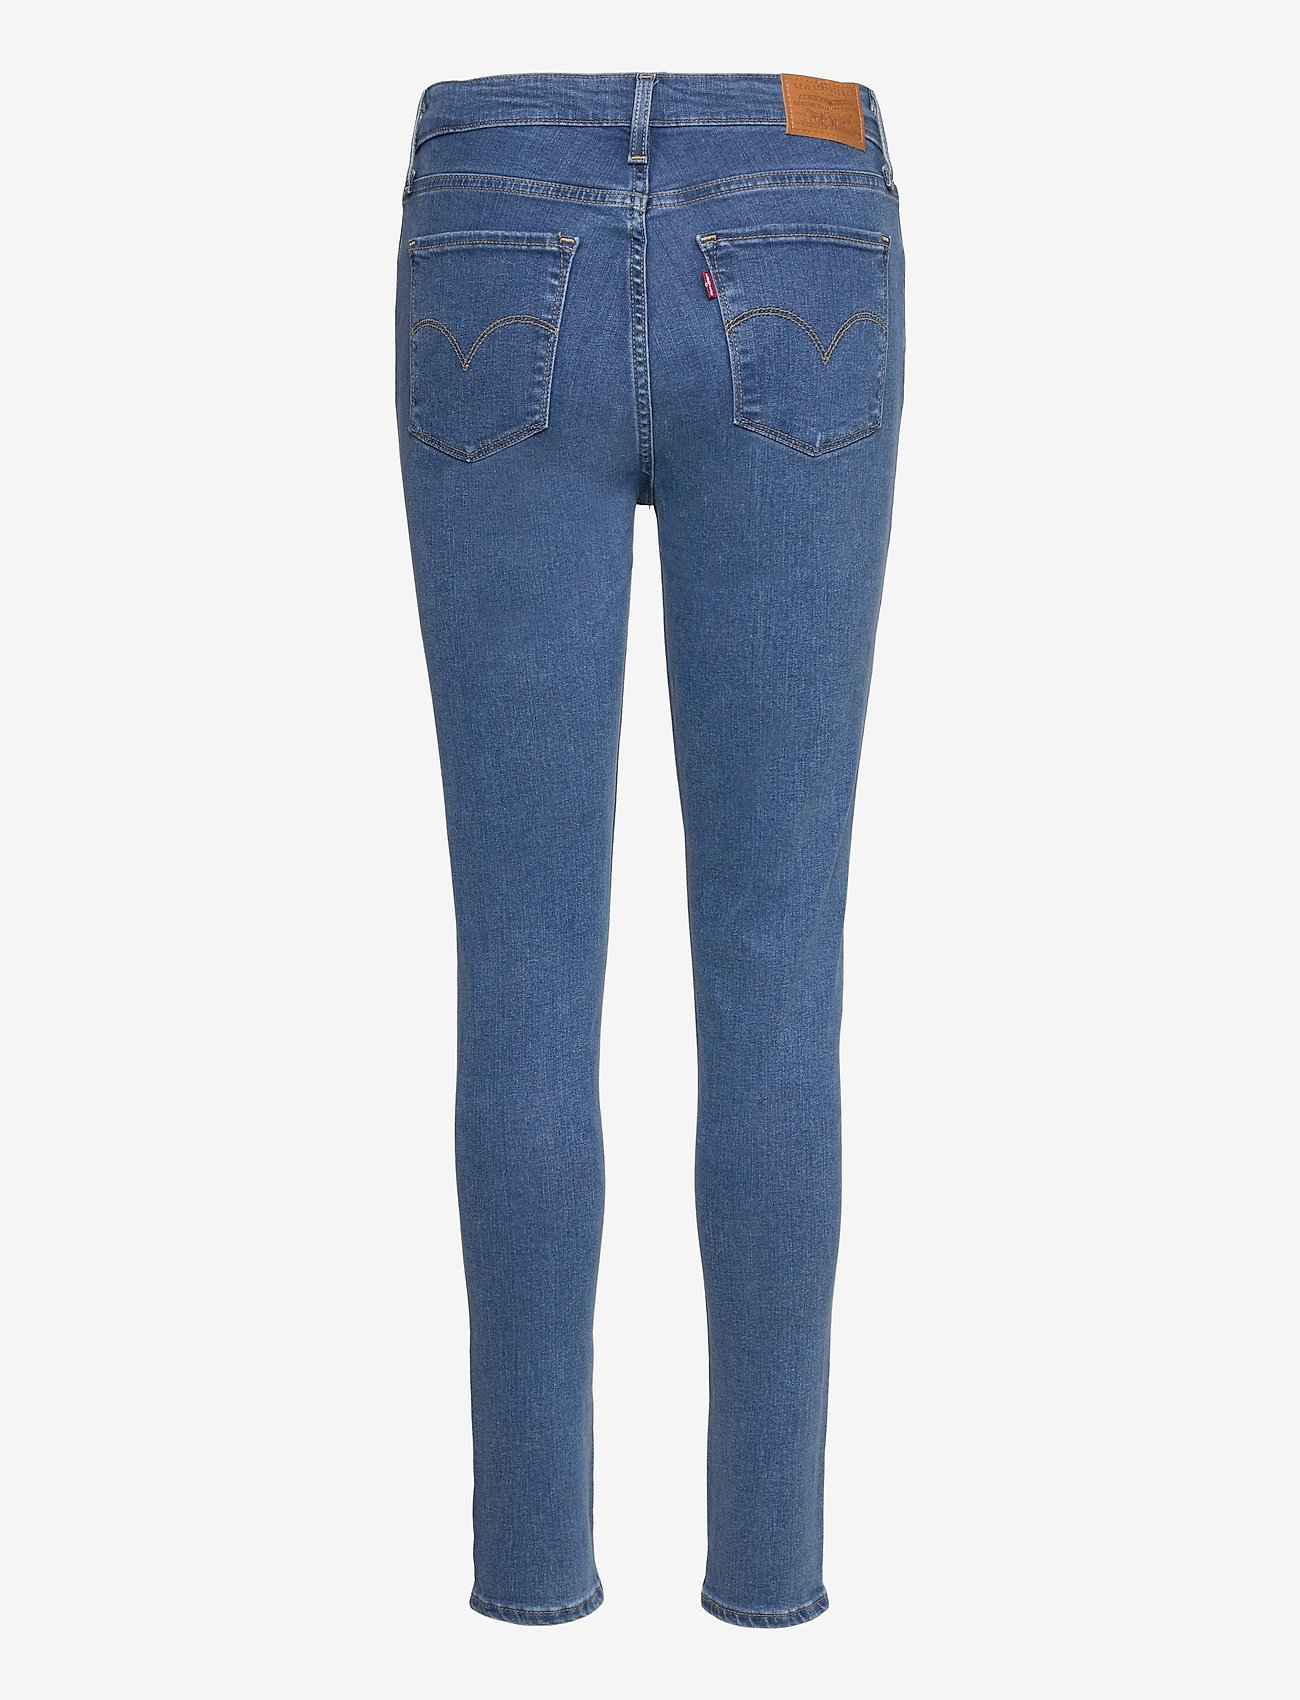 LEVI´S Women - 721 HIGH RISE SKINNY BOGOTA HE - skinny jeans - dark indigo - worn in - 1